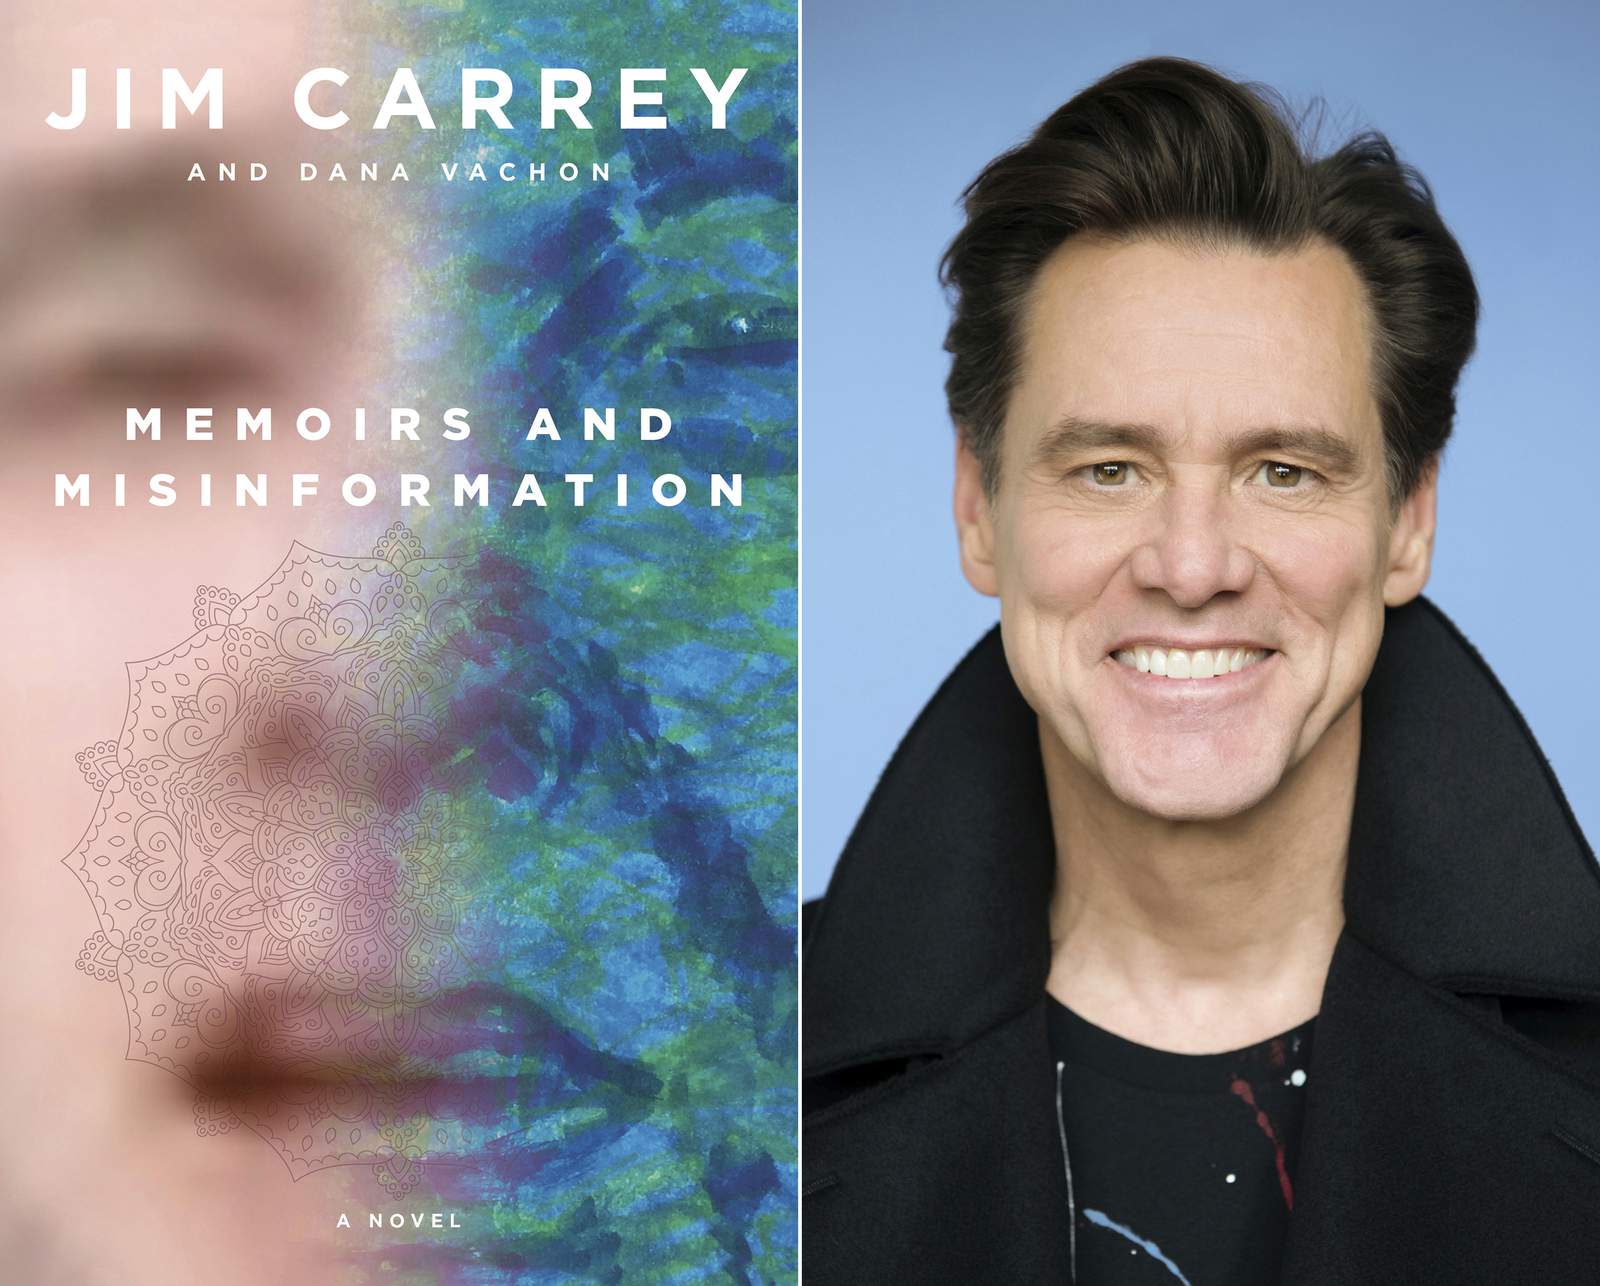 With a satirical fictional memoir, Jim Carrey gets real